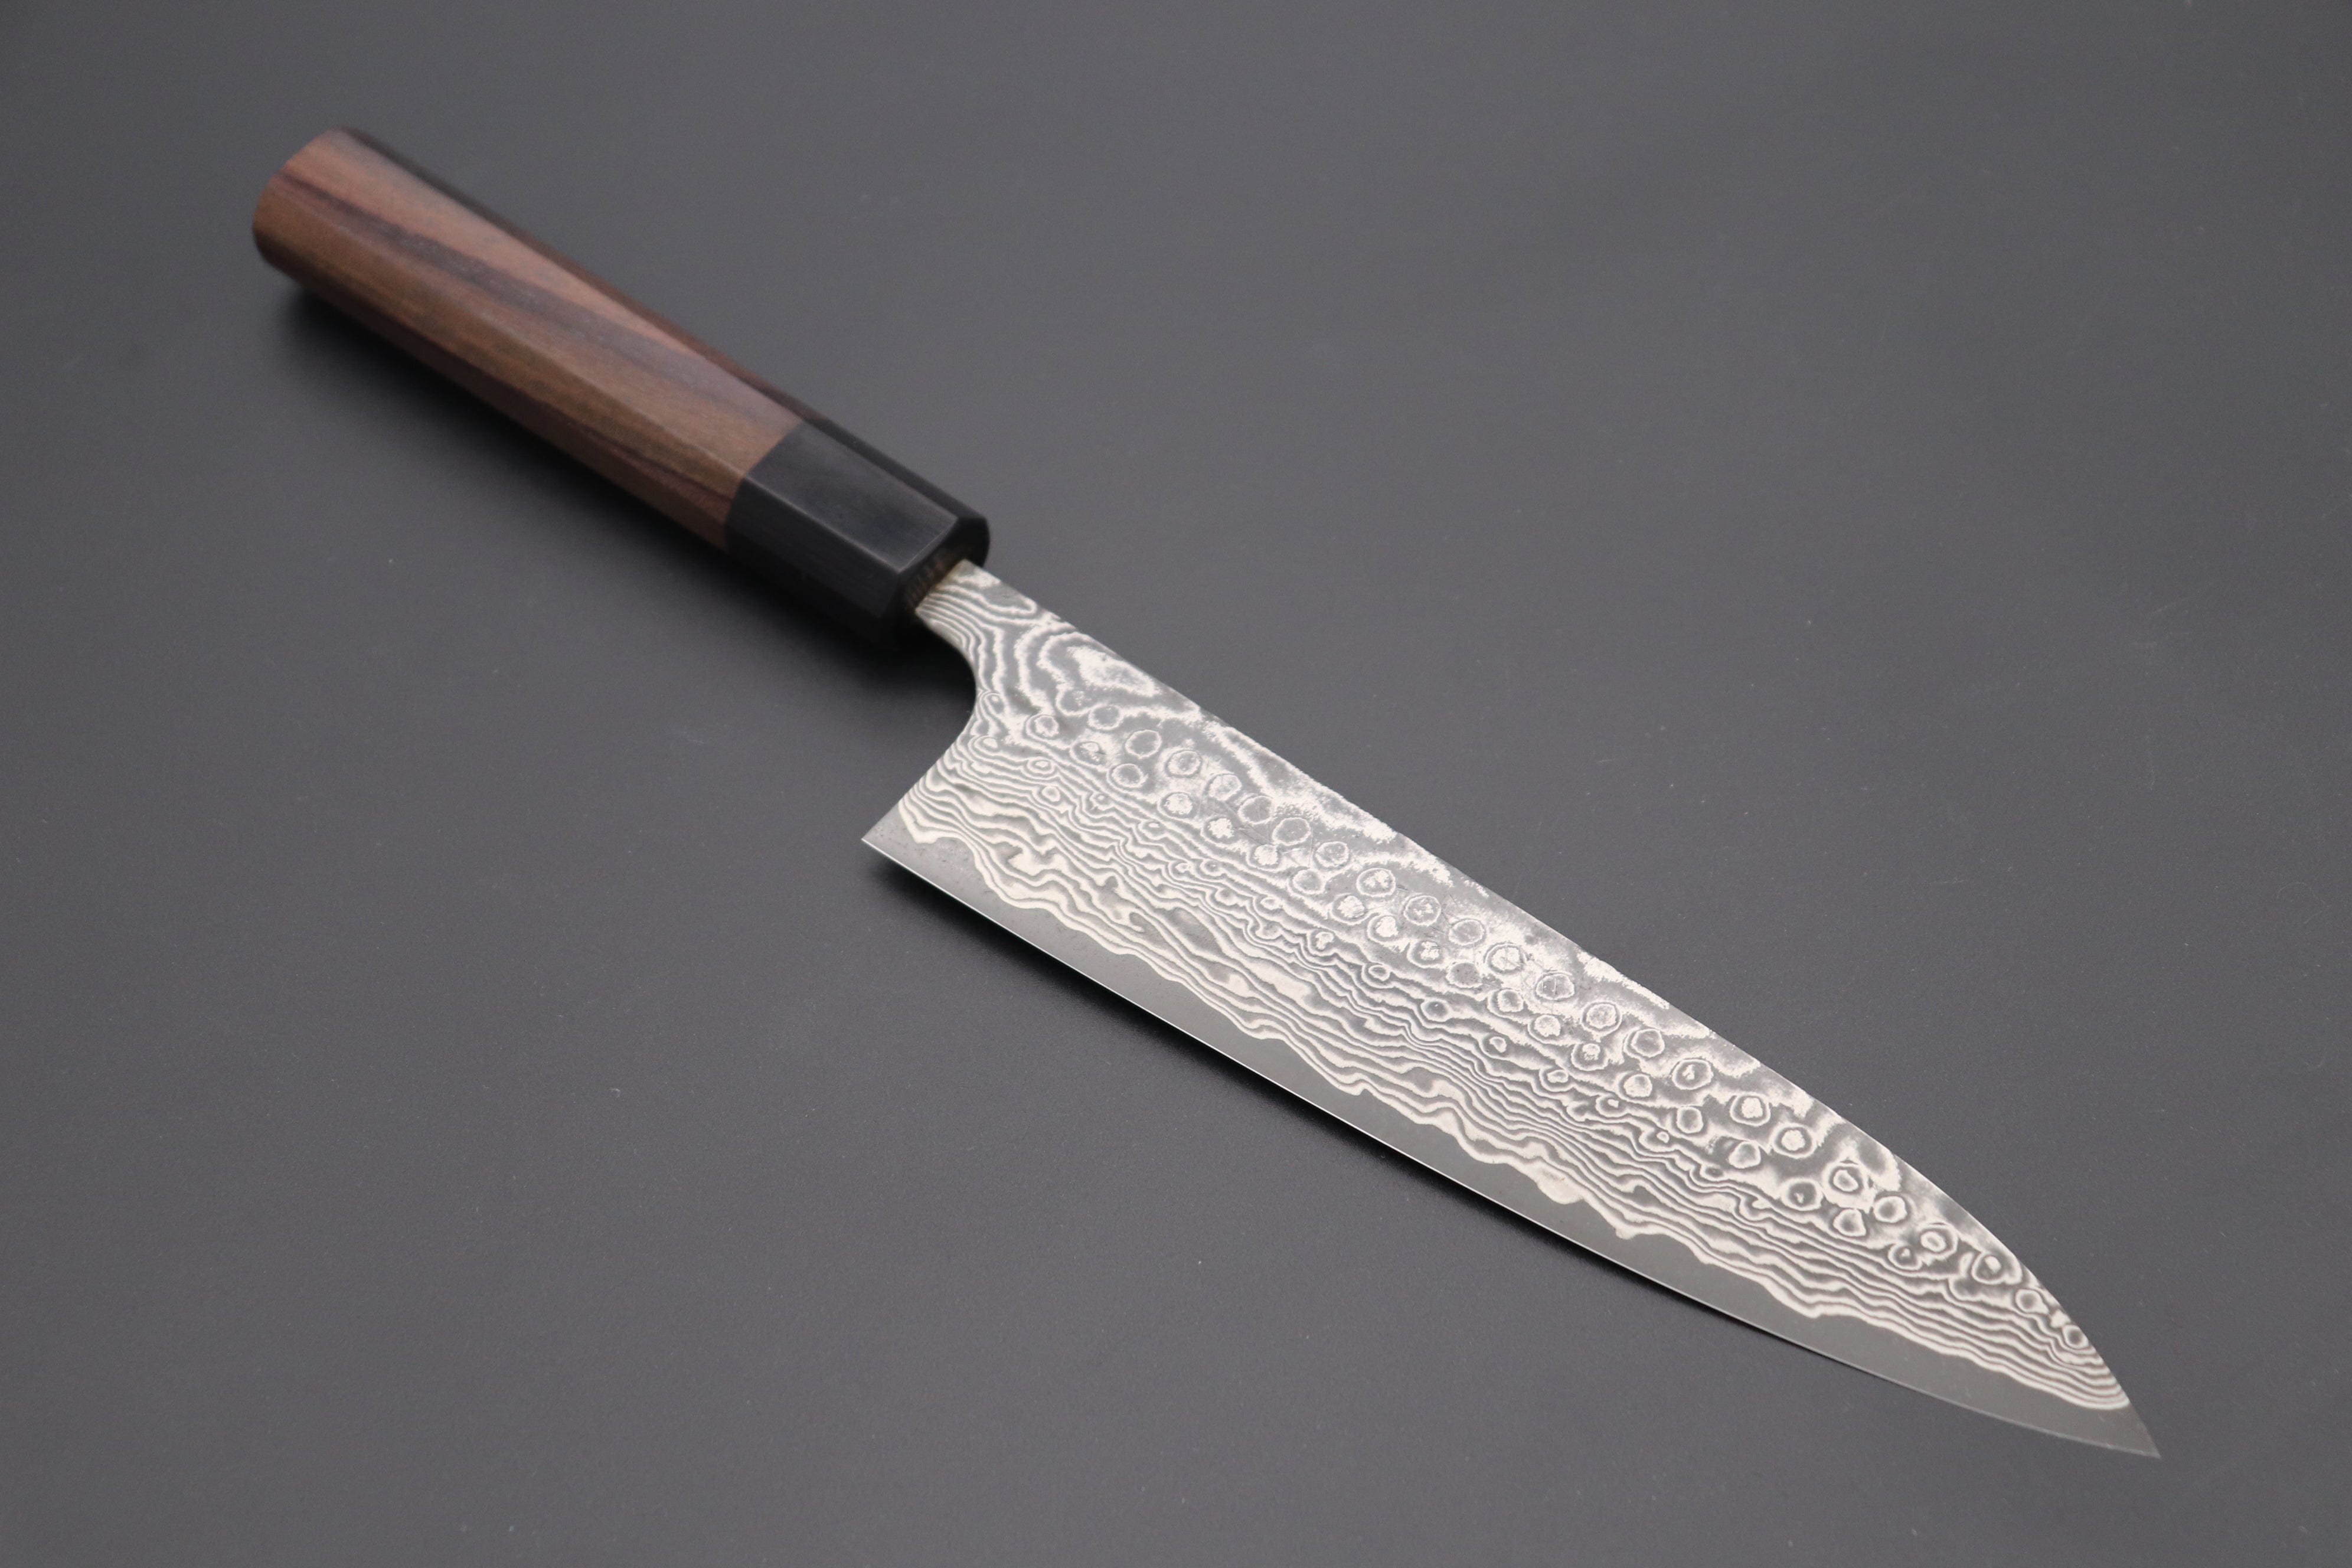 Damascus steel knife maintenance